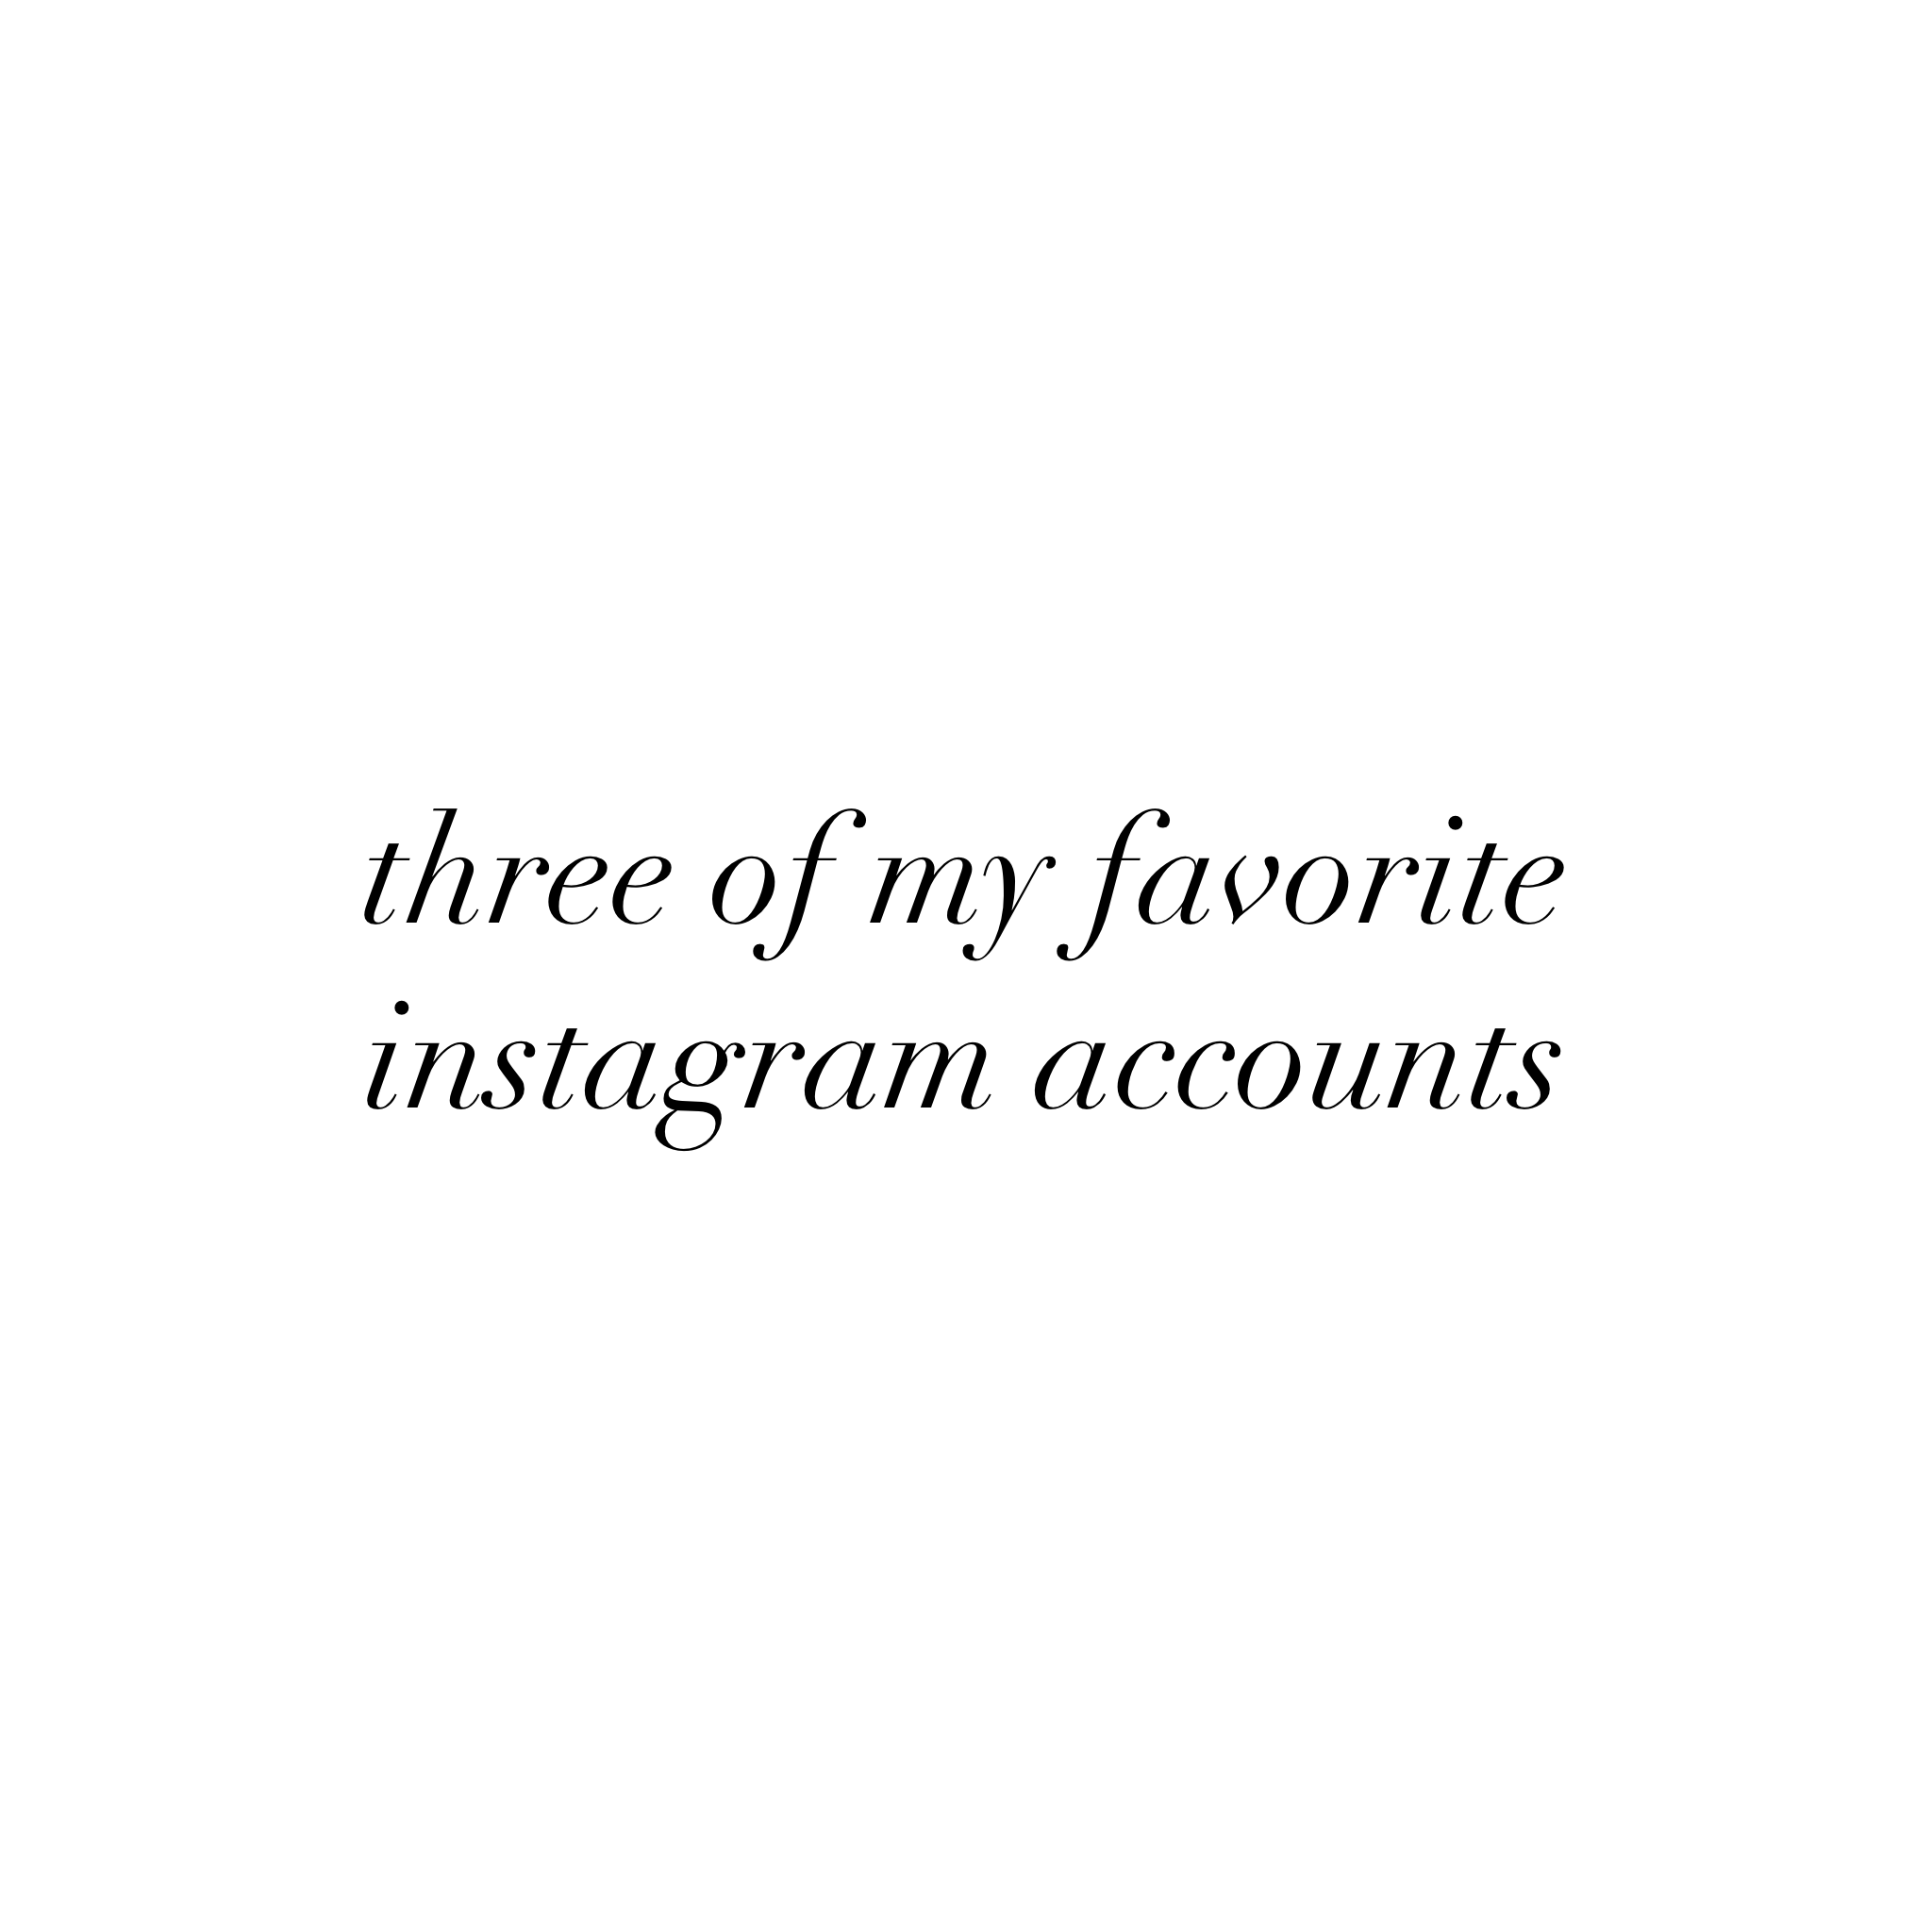 three of my favorite instagram accounts